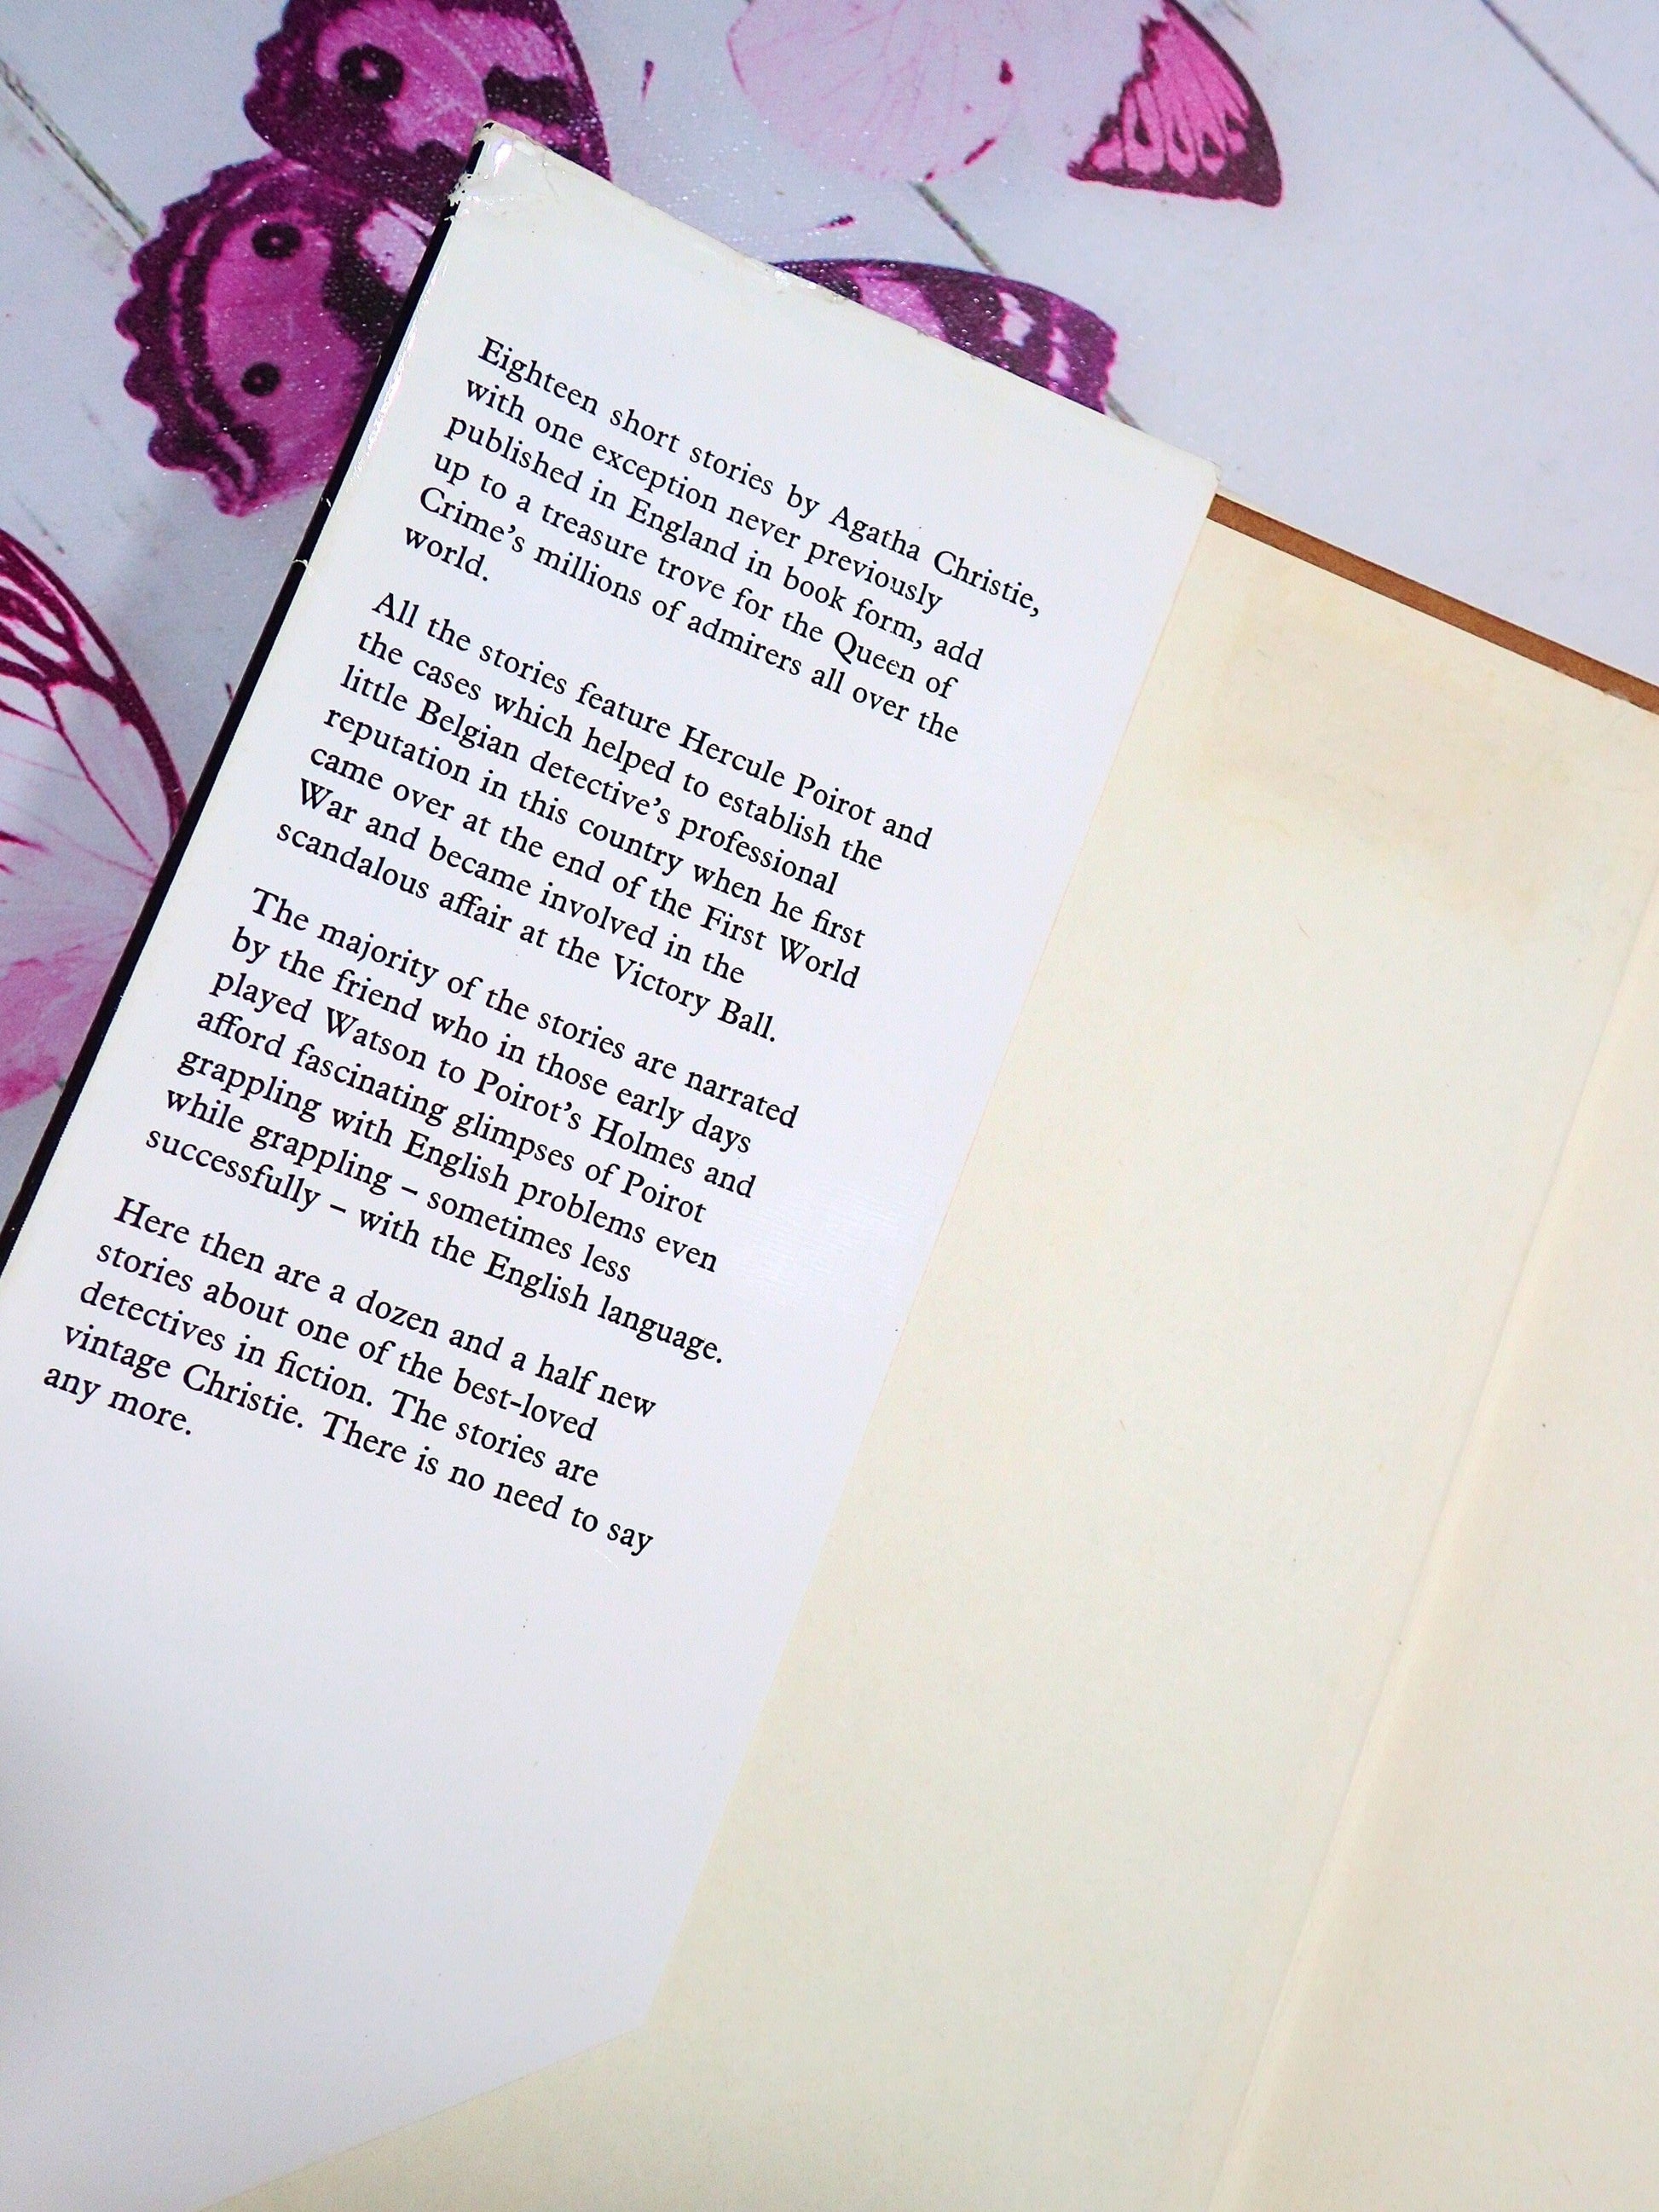 Blurb text on inner dust jacket, Eighteen short stories by Agatha Christie